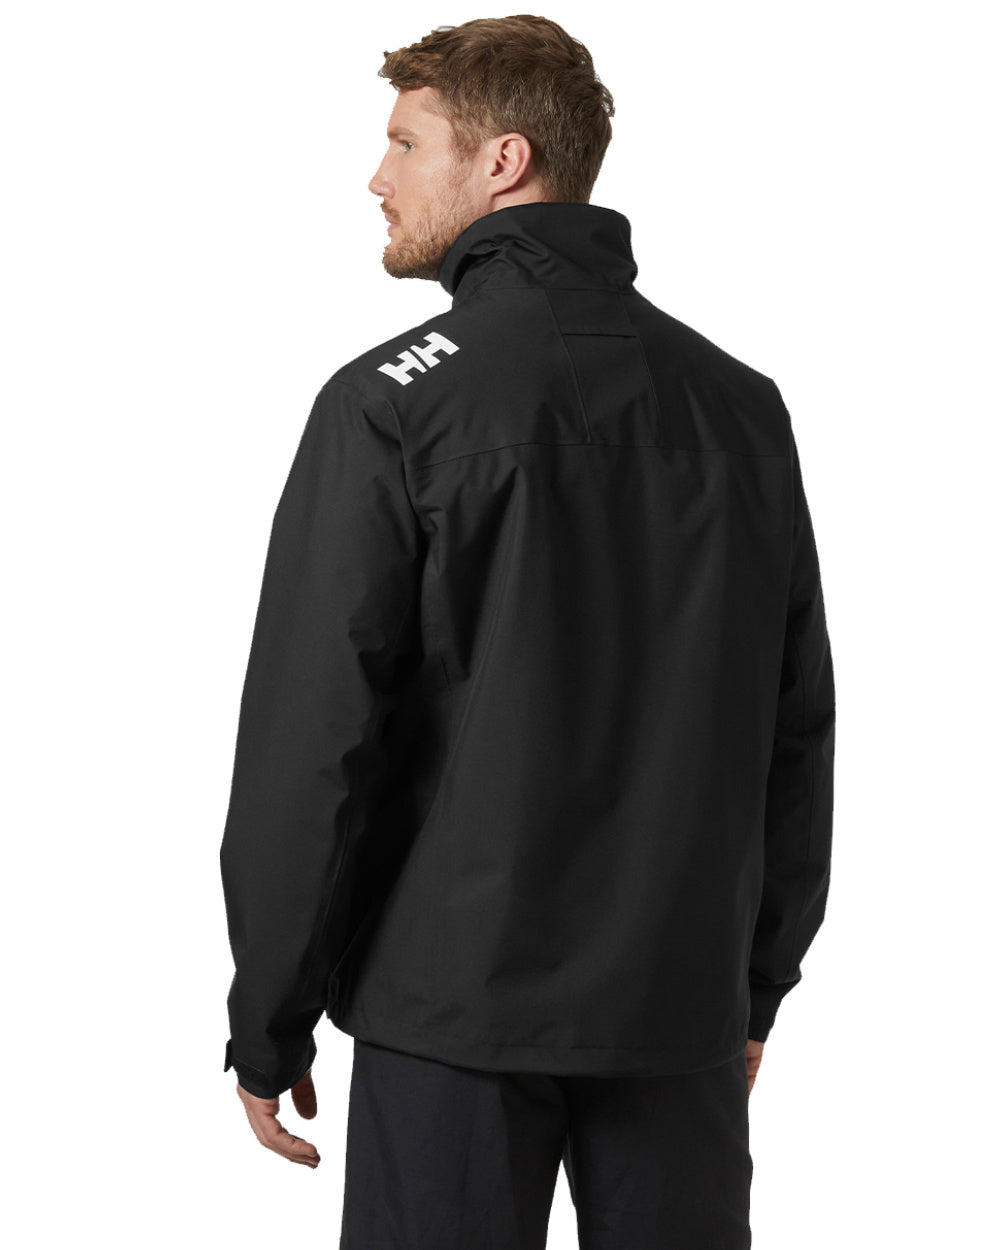 Black Coloured Helly Hansen Mens Crew Midlayer Jacket 2 On A White Background 